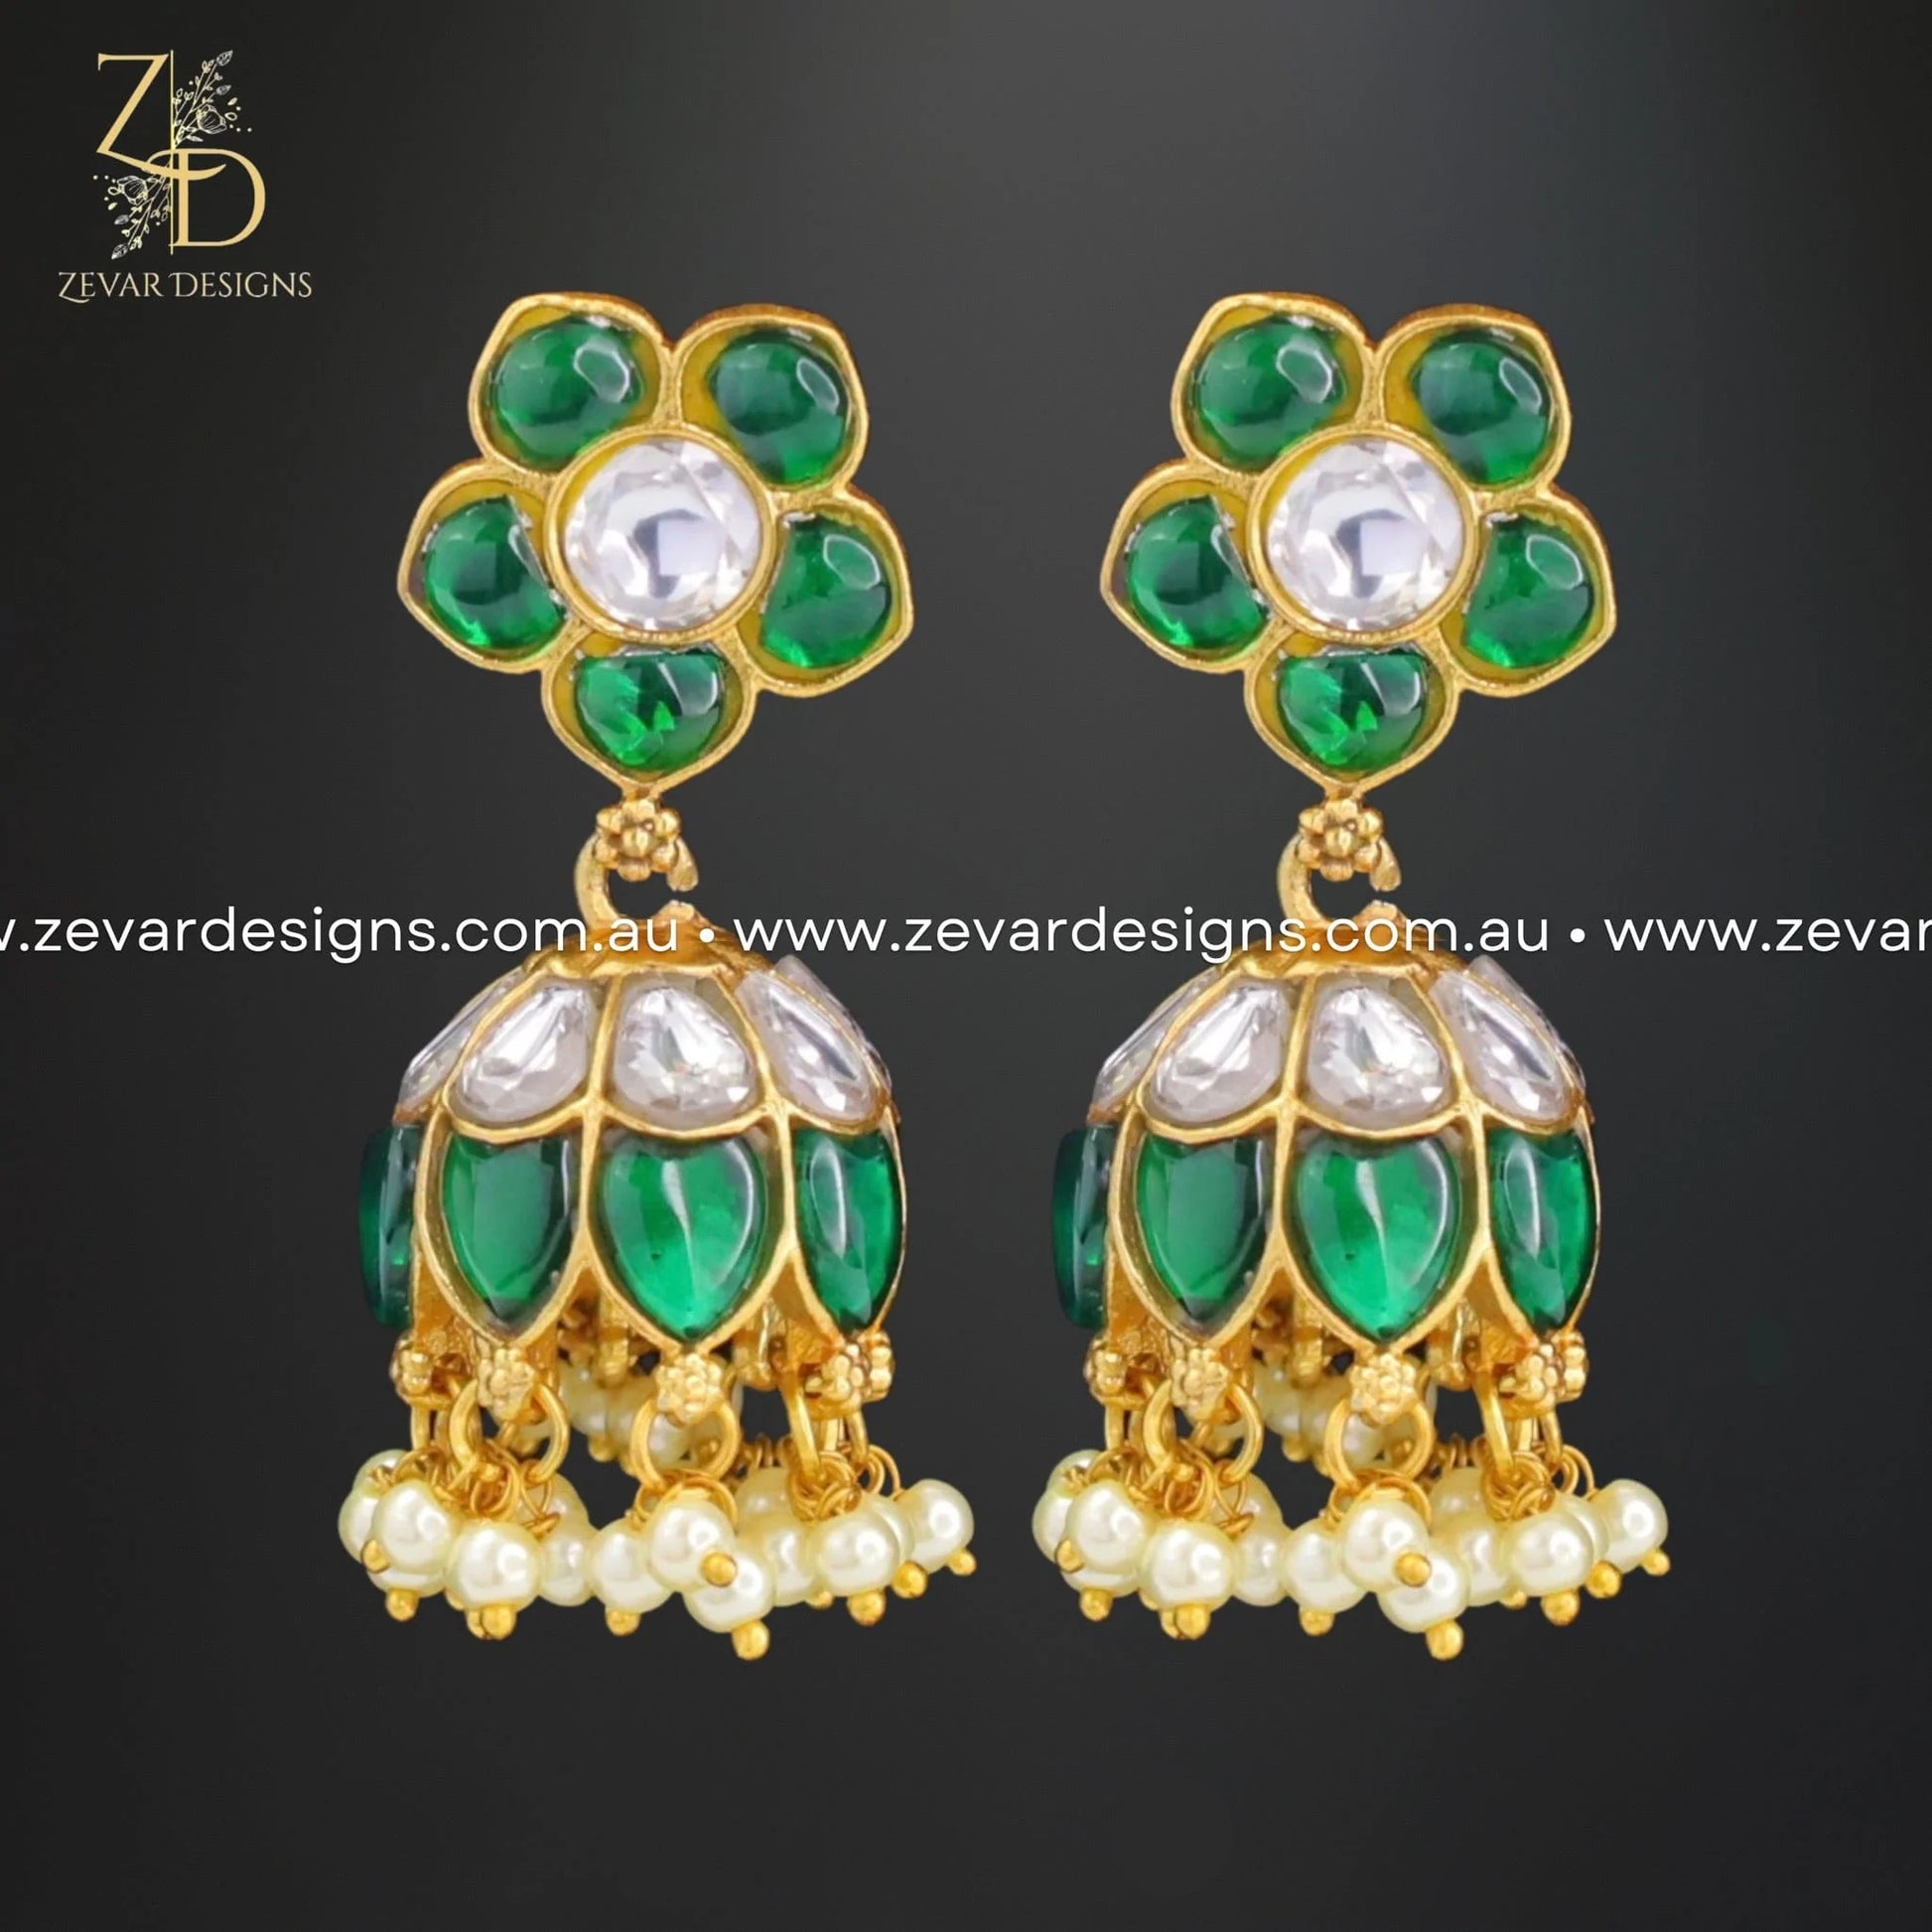 Zevar Designs Kundan Earrings Jadau Kundan Jhumki (Small)  - Green